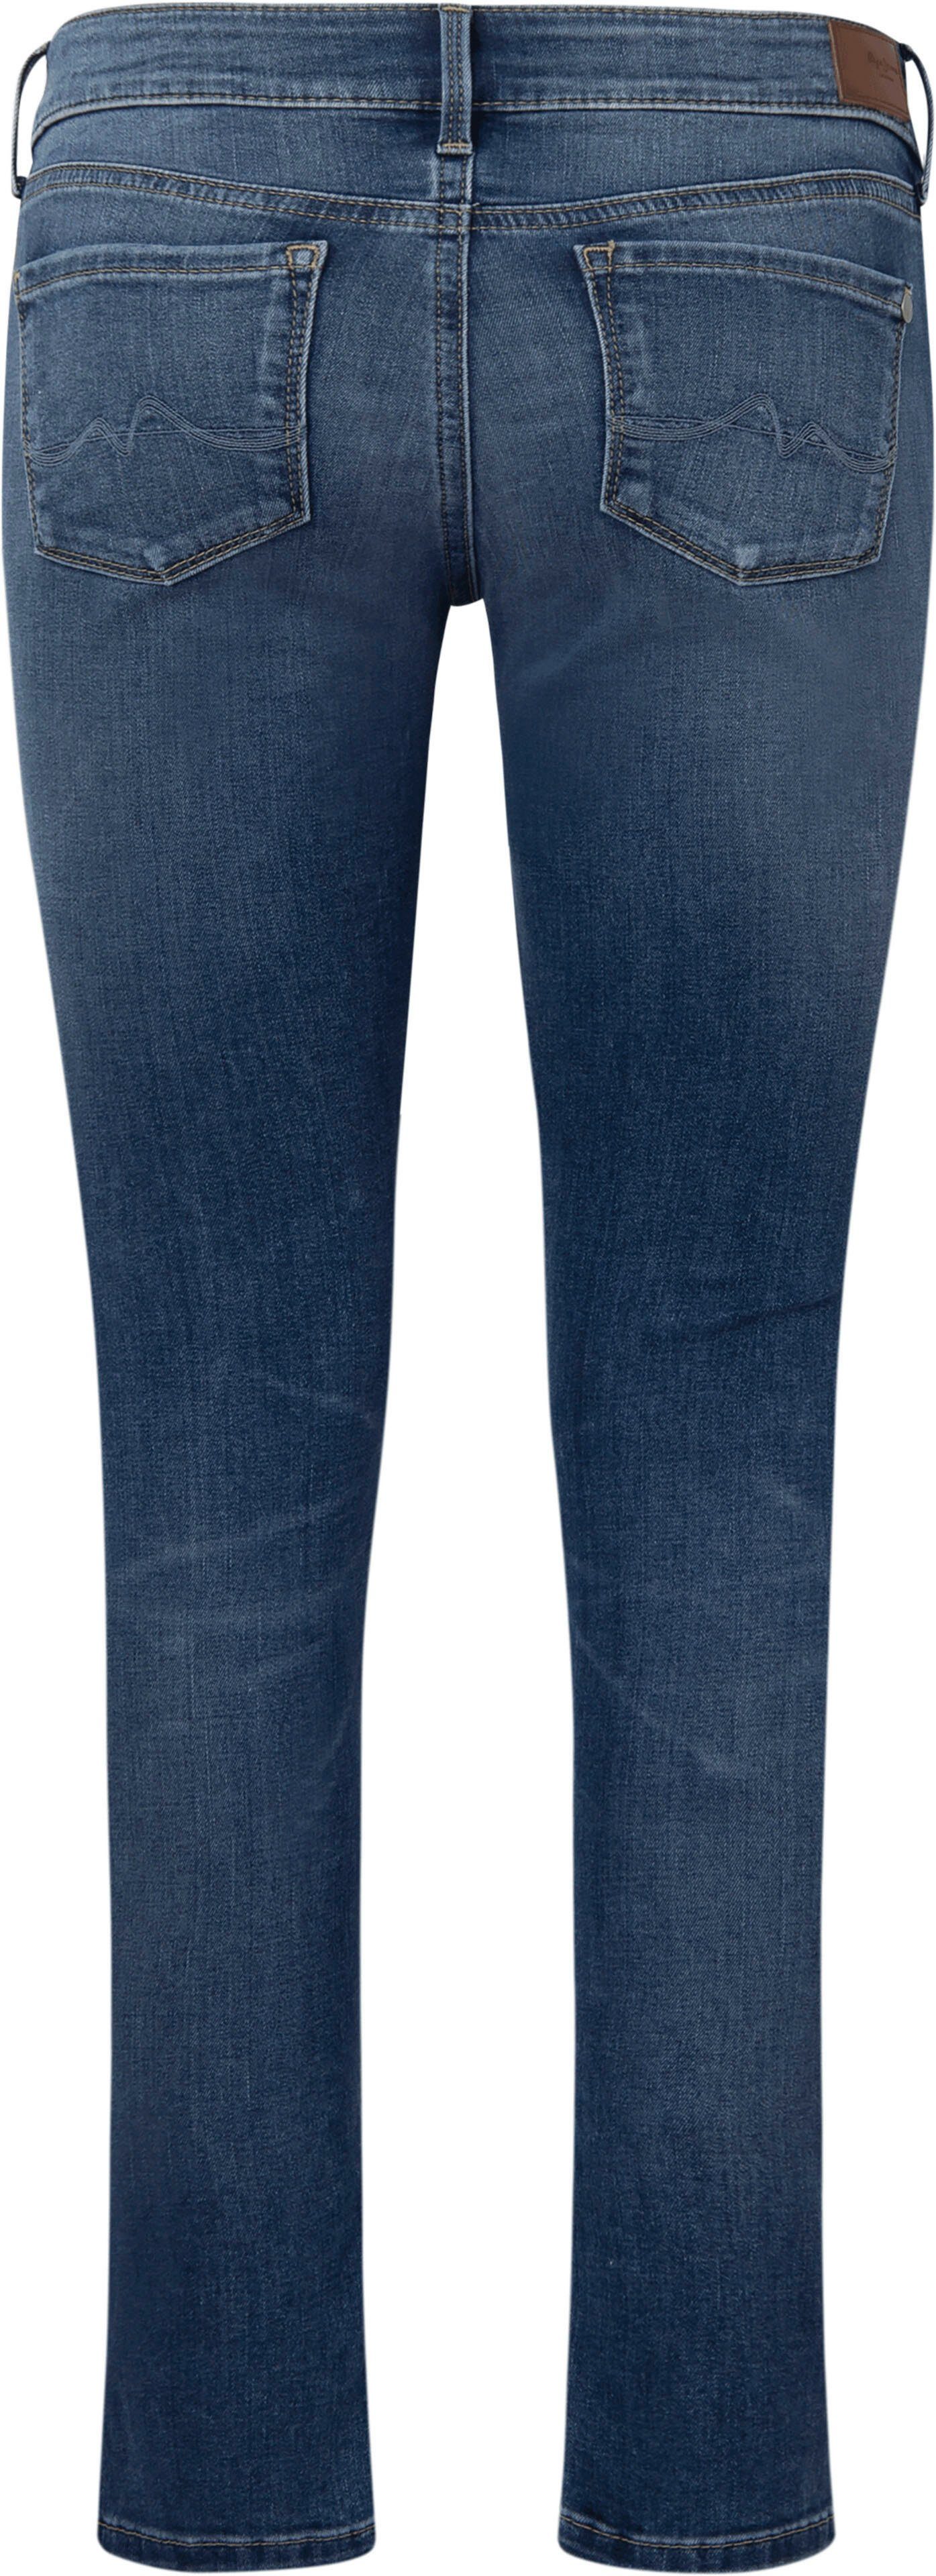 Pepe Jeans Skinny-fit-Jeans mit Stretch-Anteil Bund 1-Knopf SOHO im blue 5-Pocket-Stil und